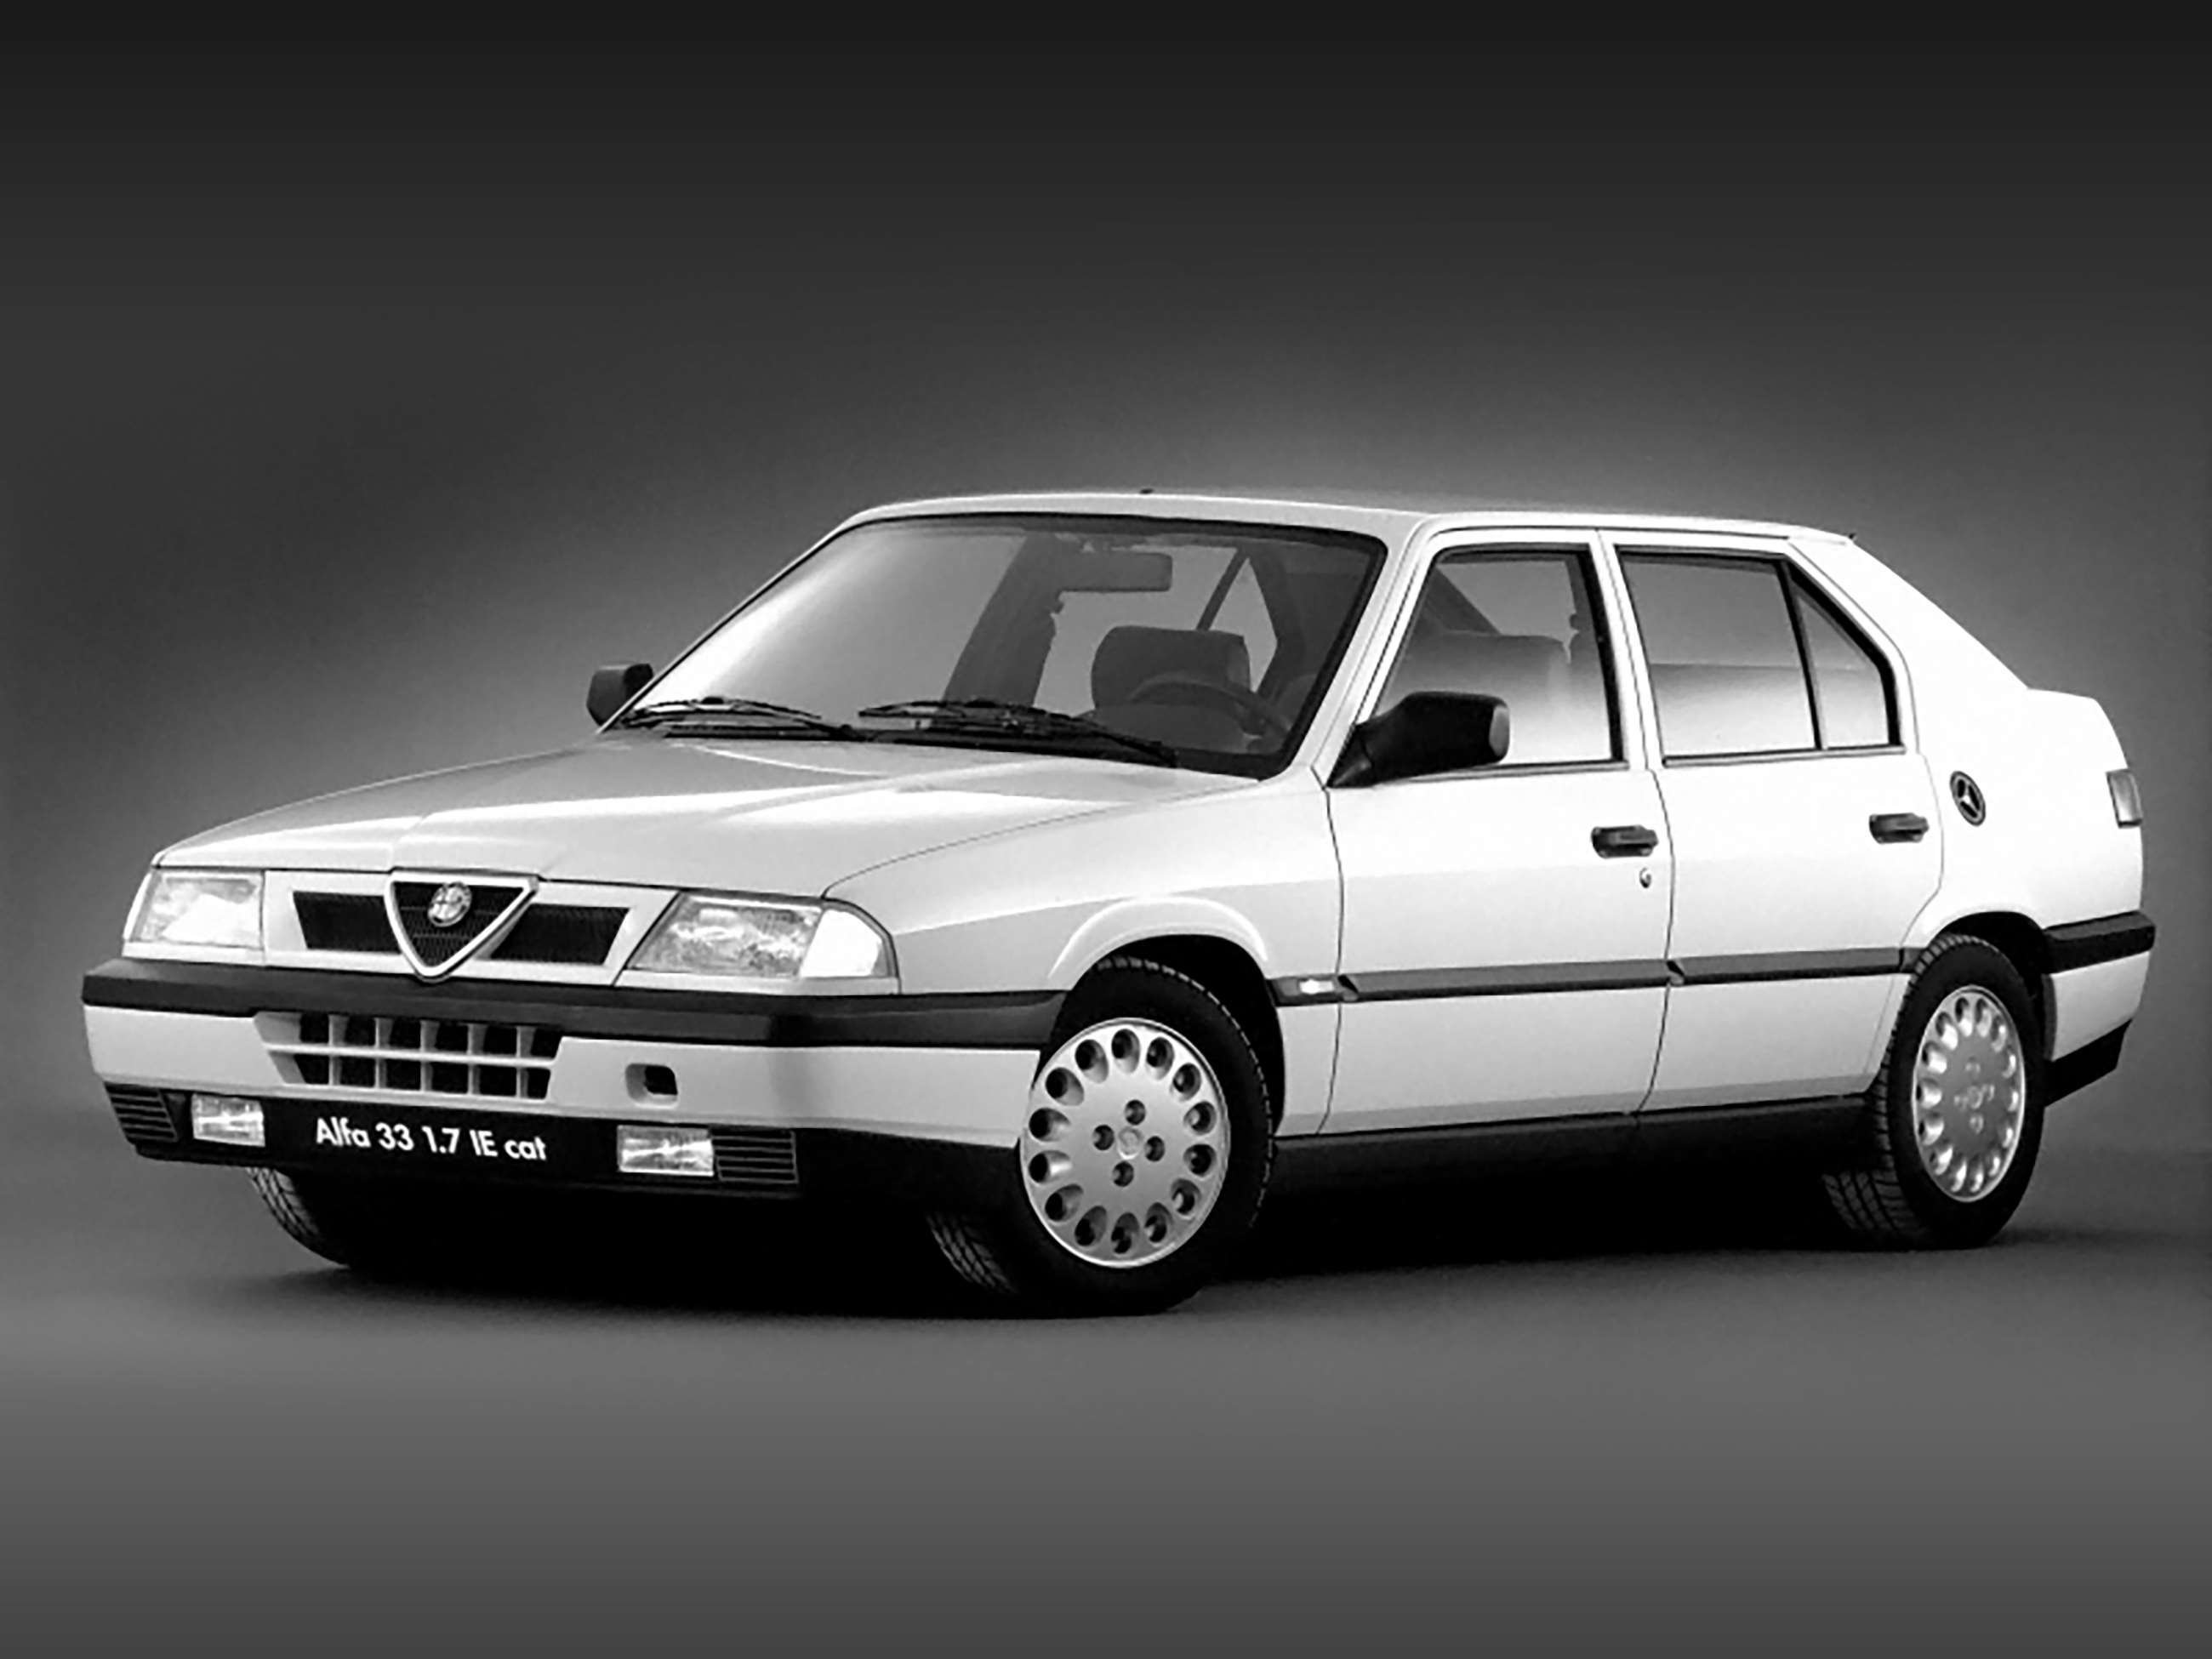 axons-anorak-best-car-facelifts-03.jpg